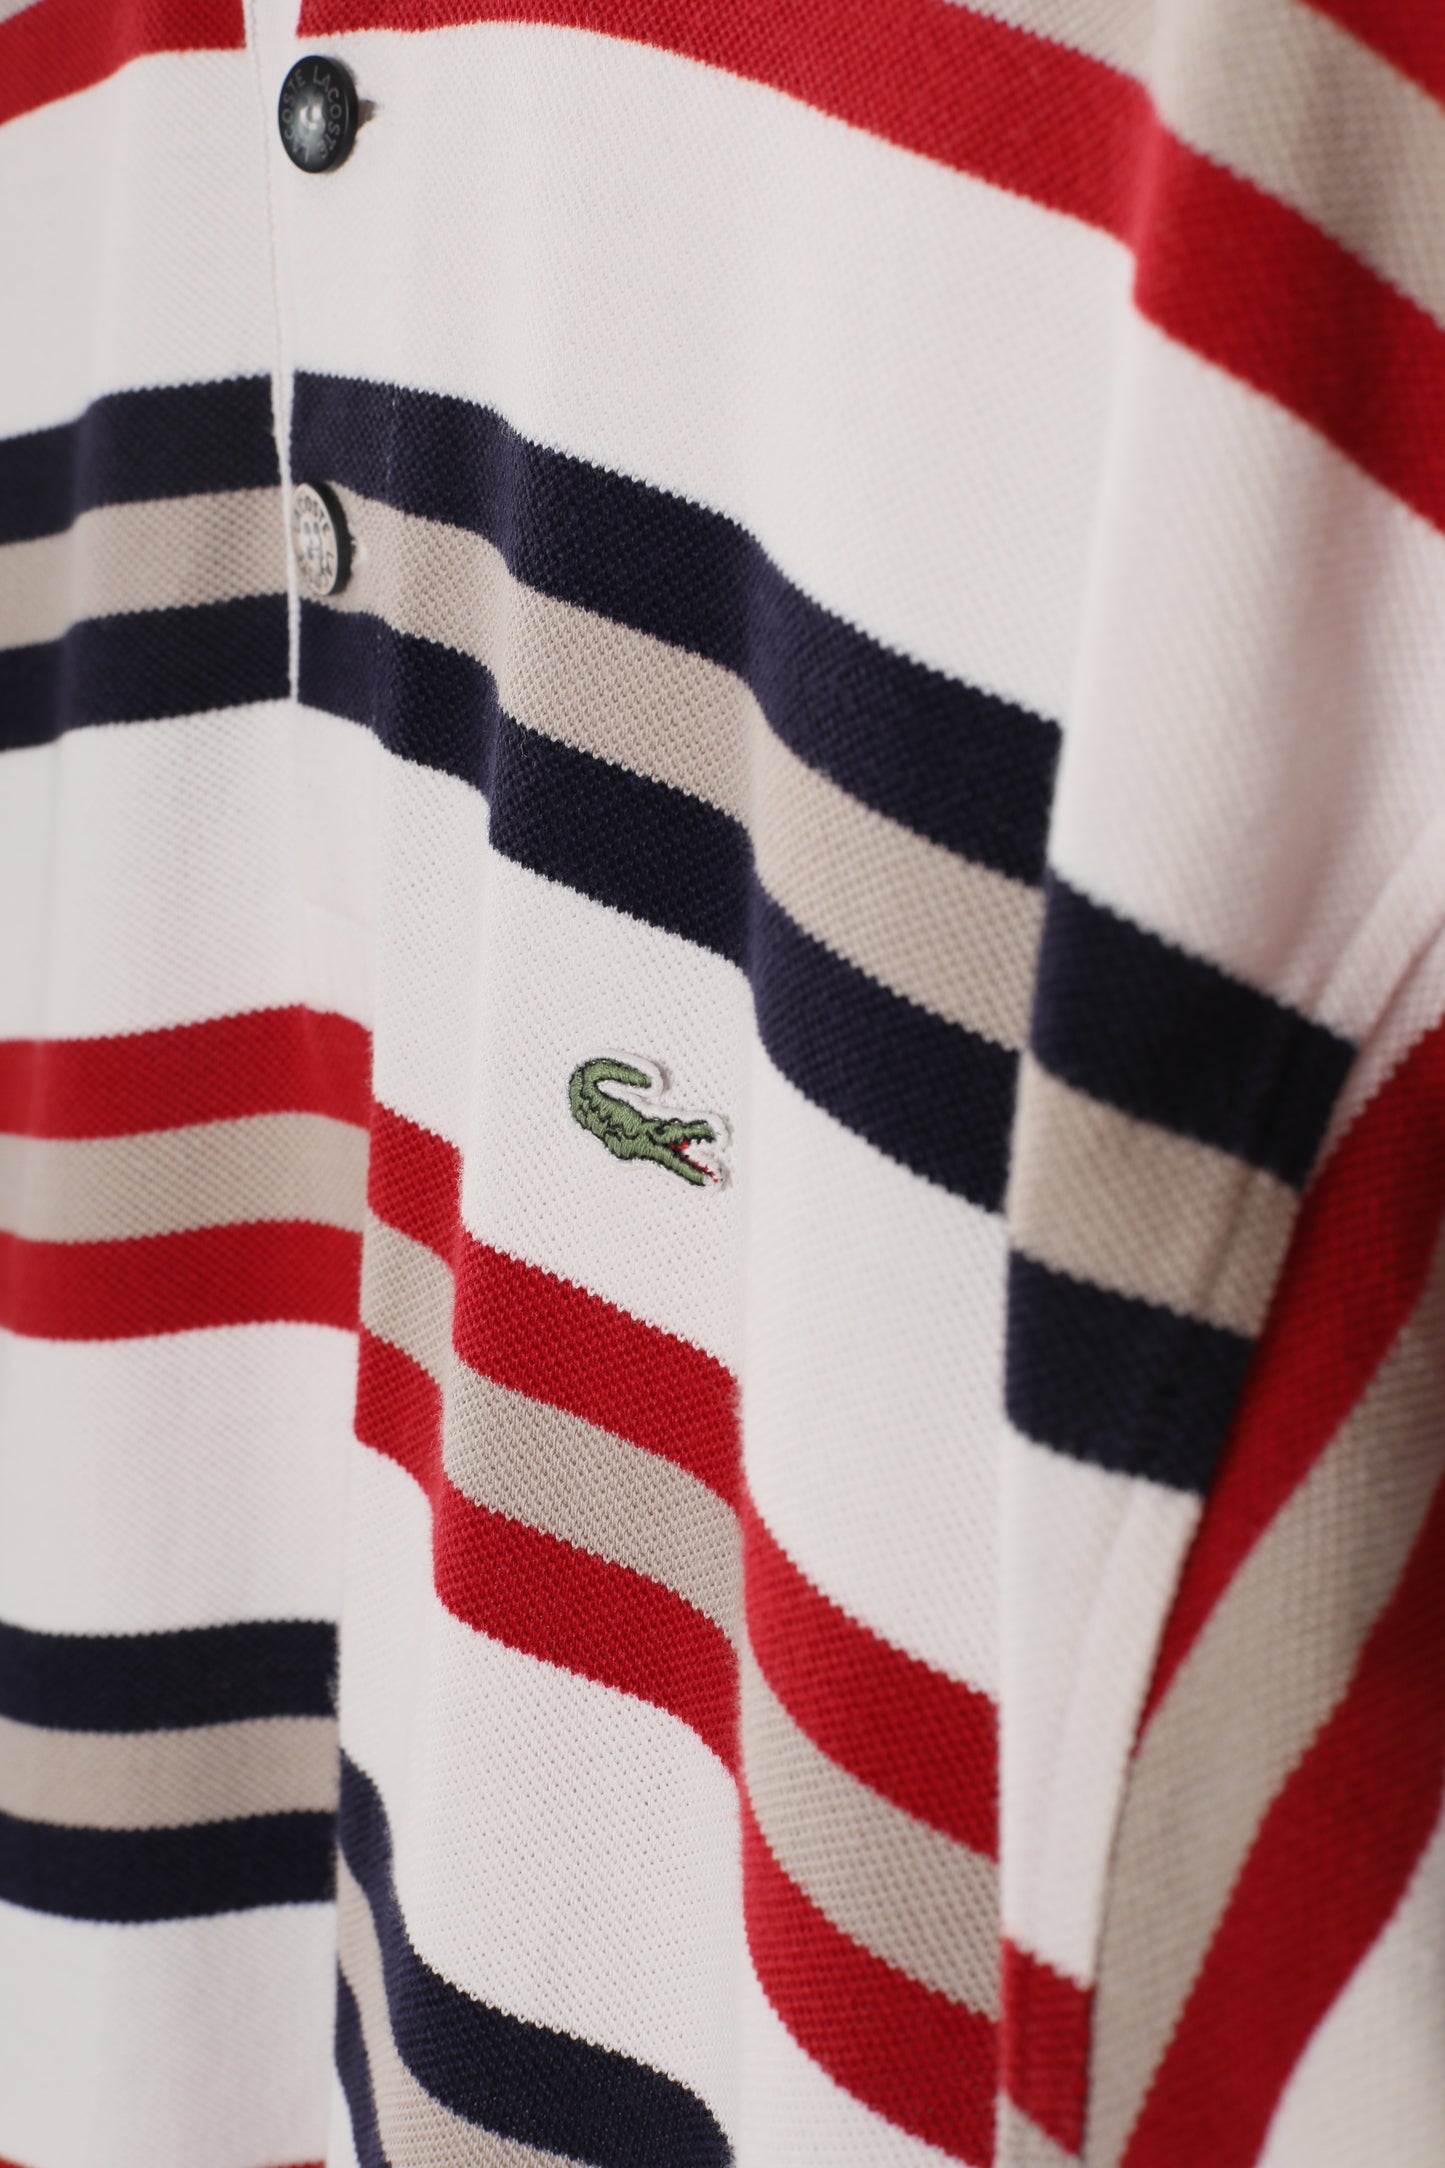 00s Lacoste stripe long sleeve polo shirt (L)